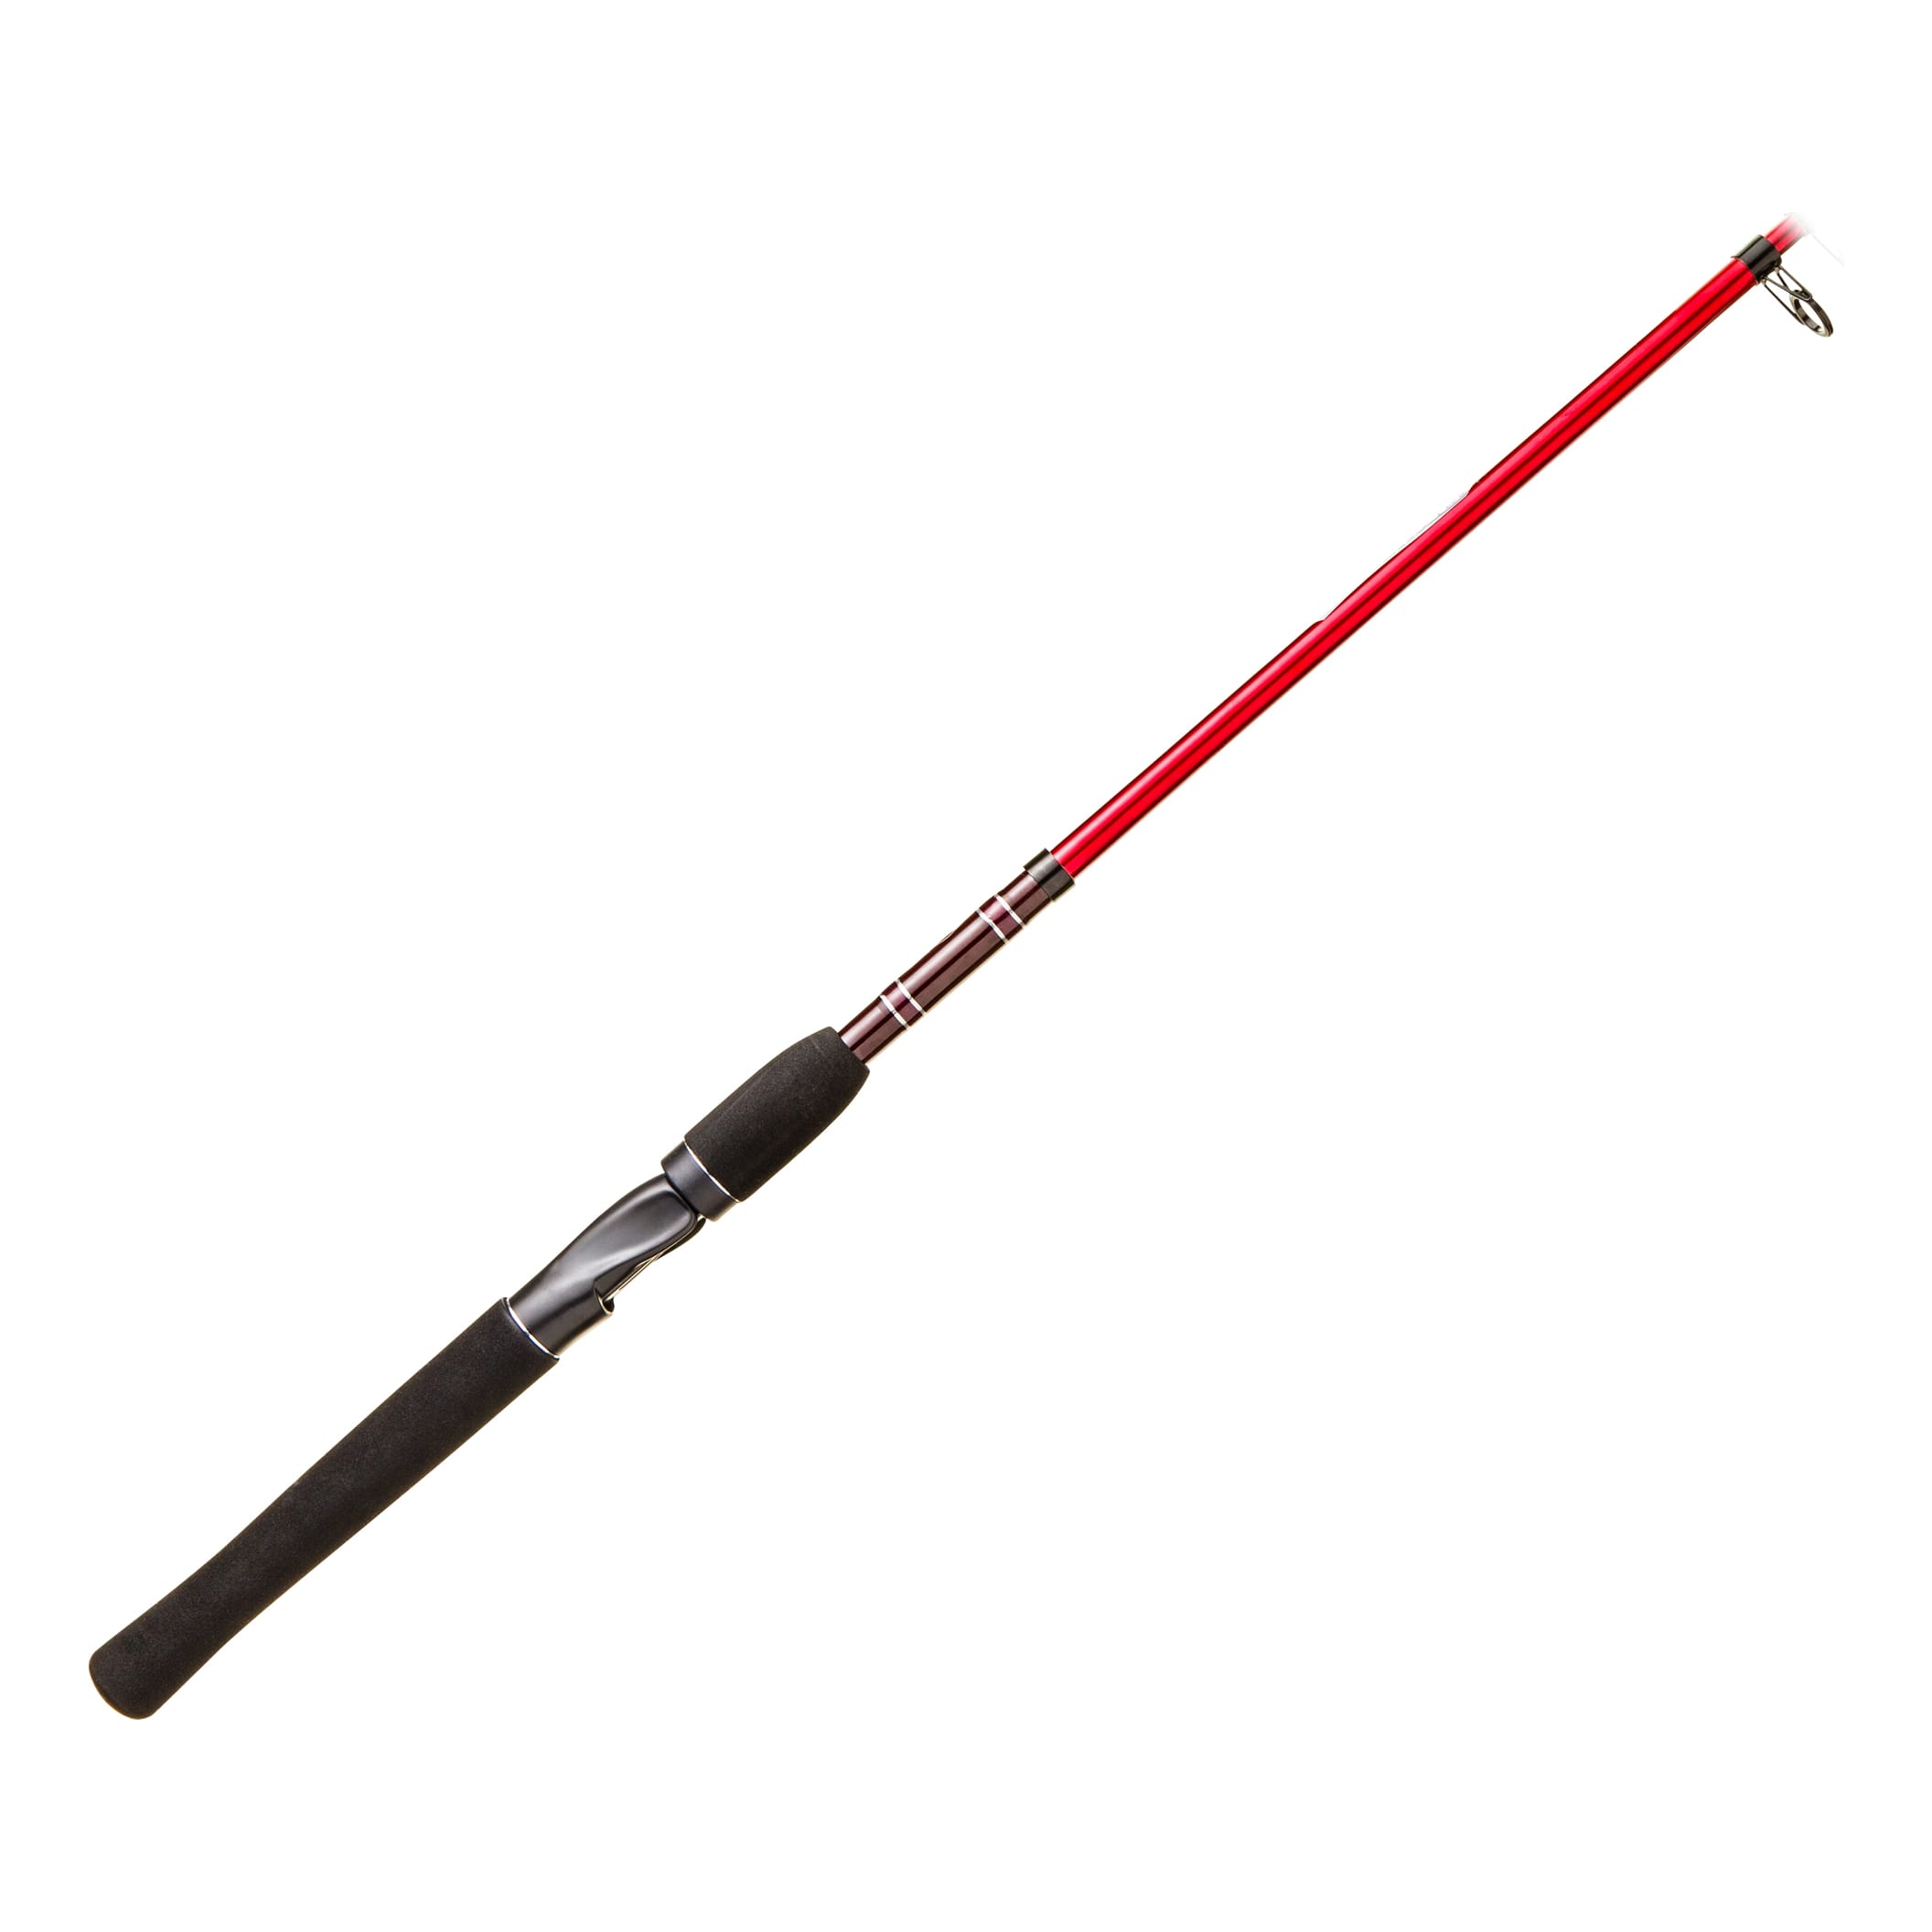 Telescopic Fishing Rod, Rambler Spinning Reel